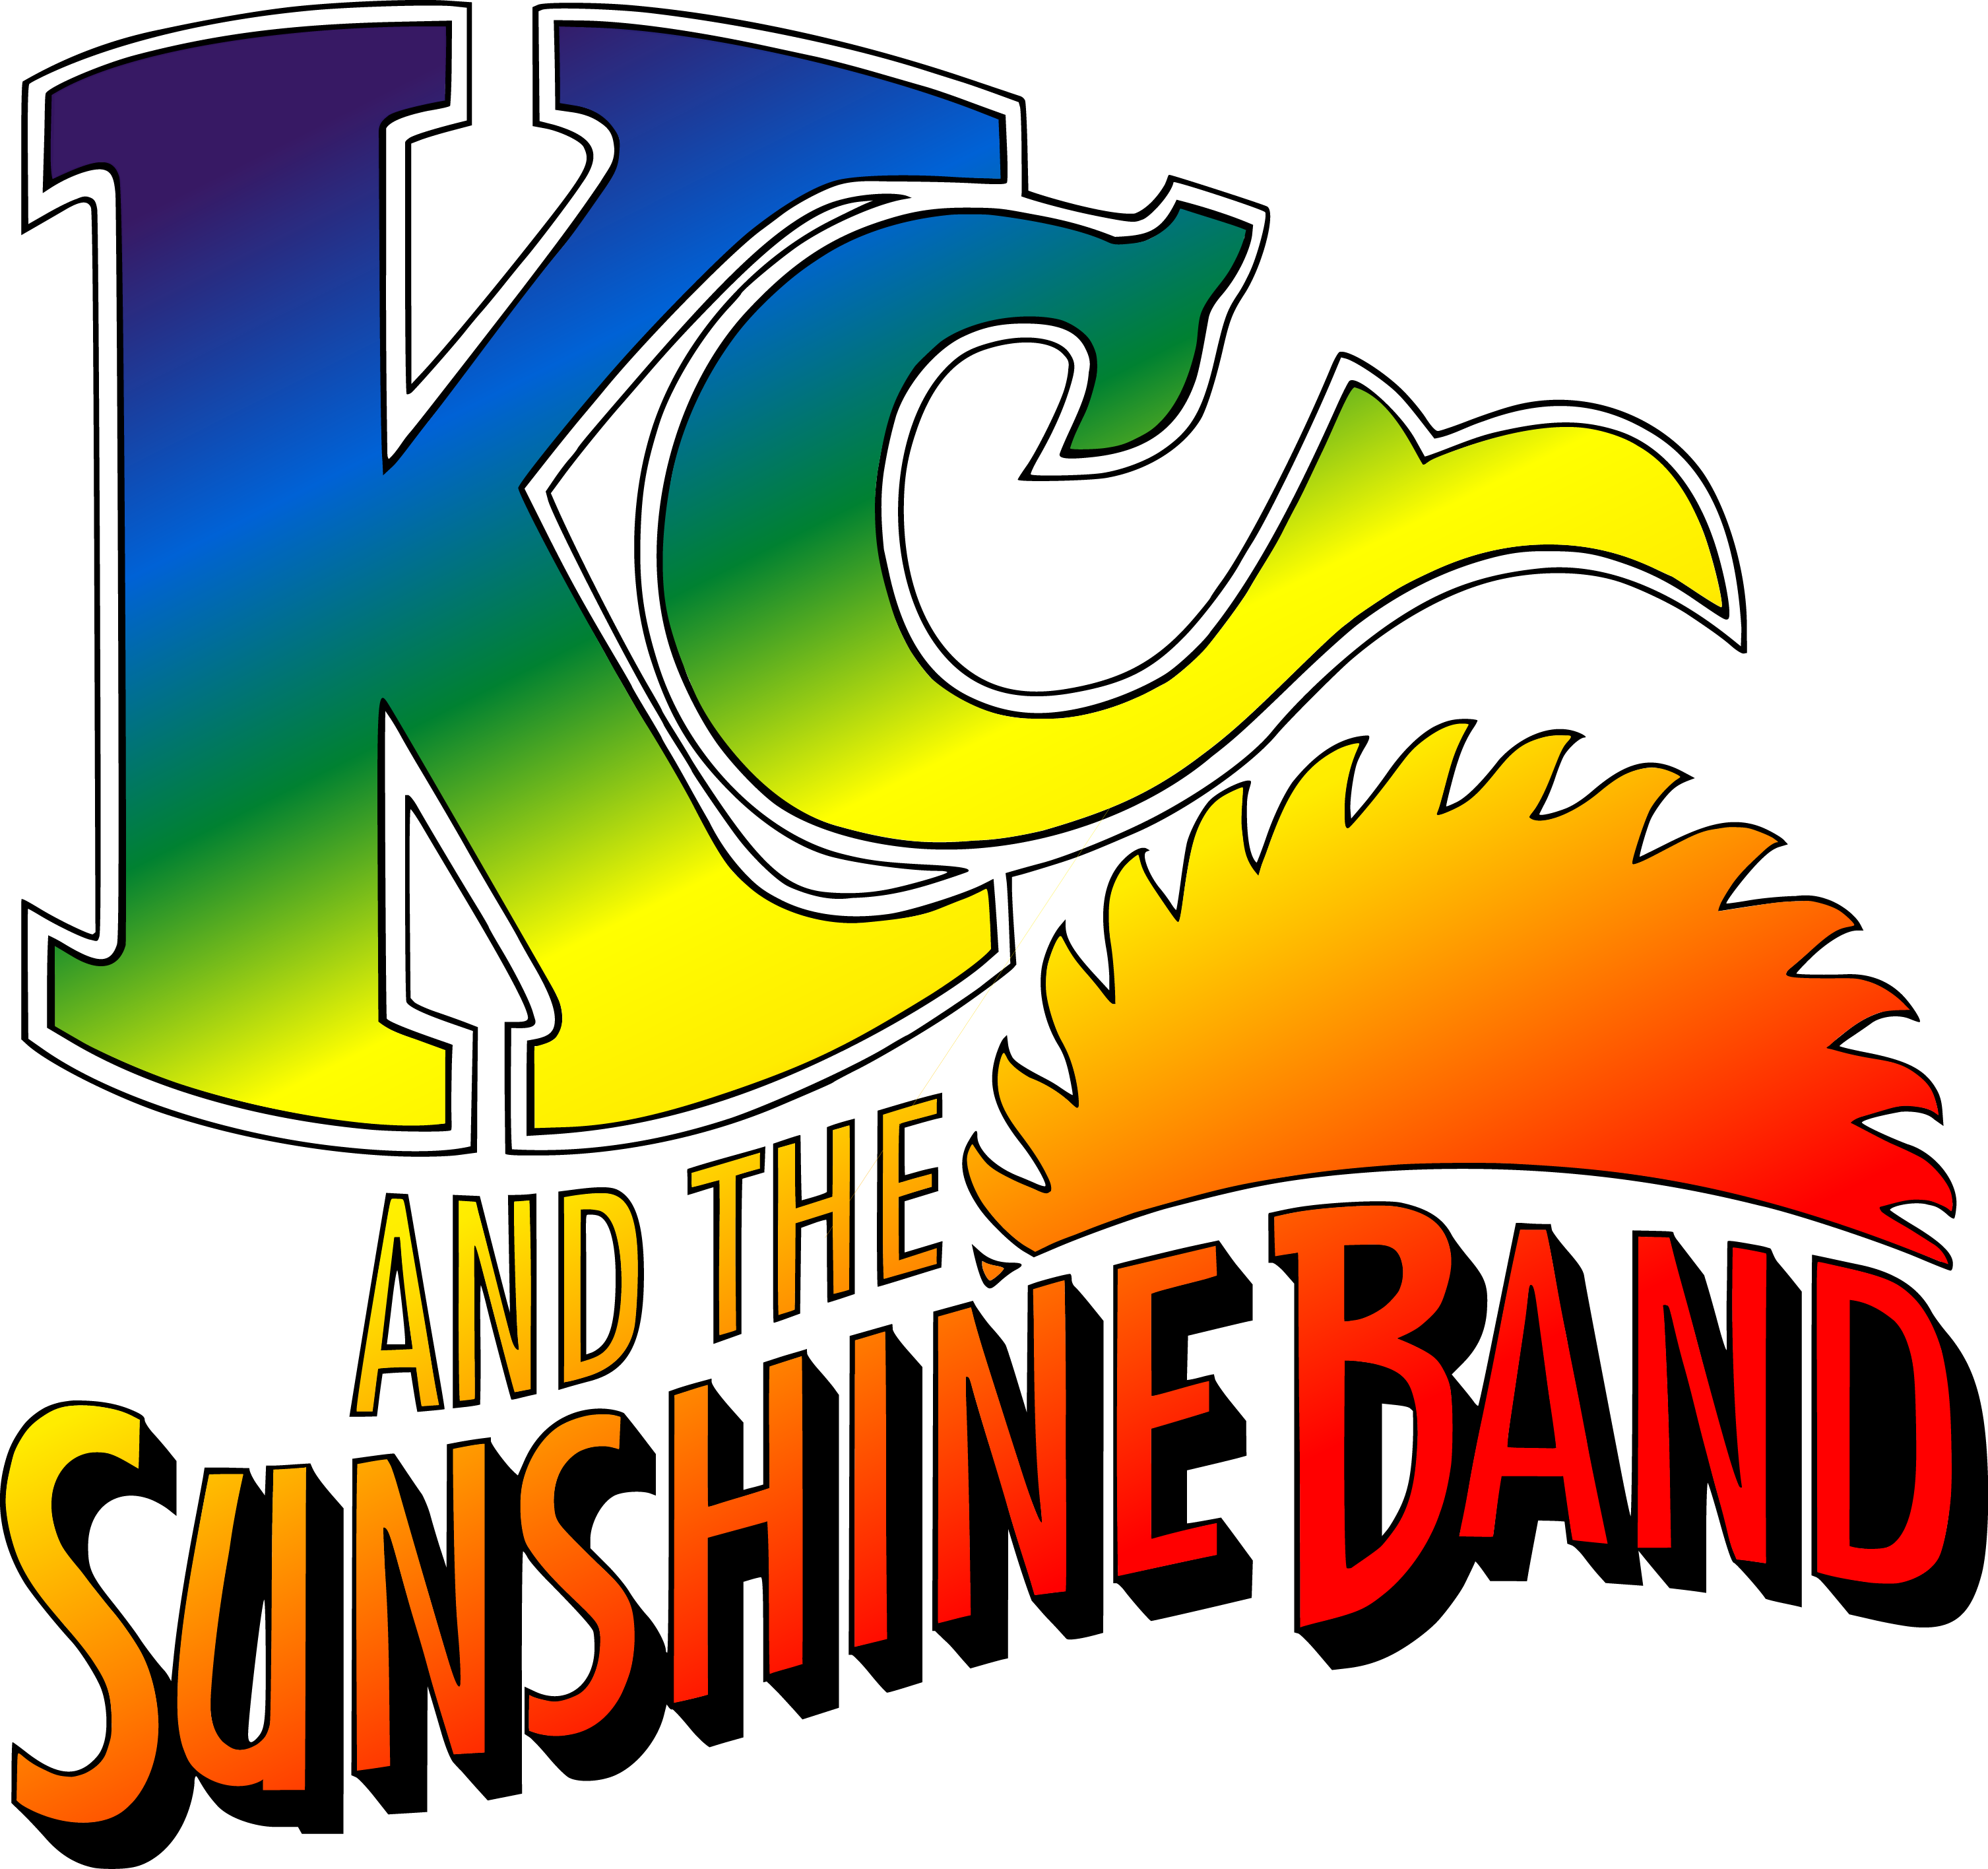 Kc - Kc And The Sunshine Band Logo (3013x2832)